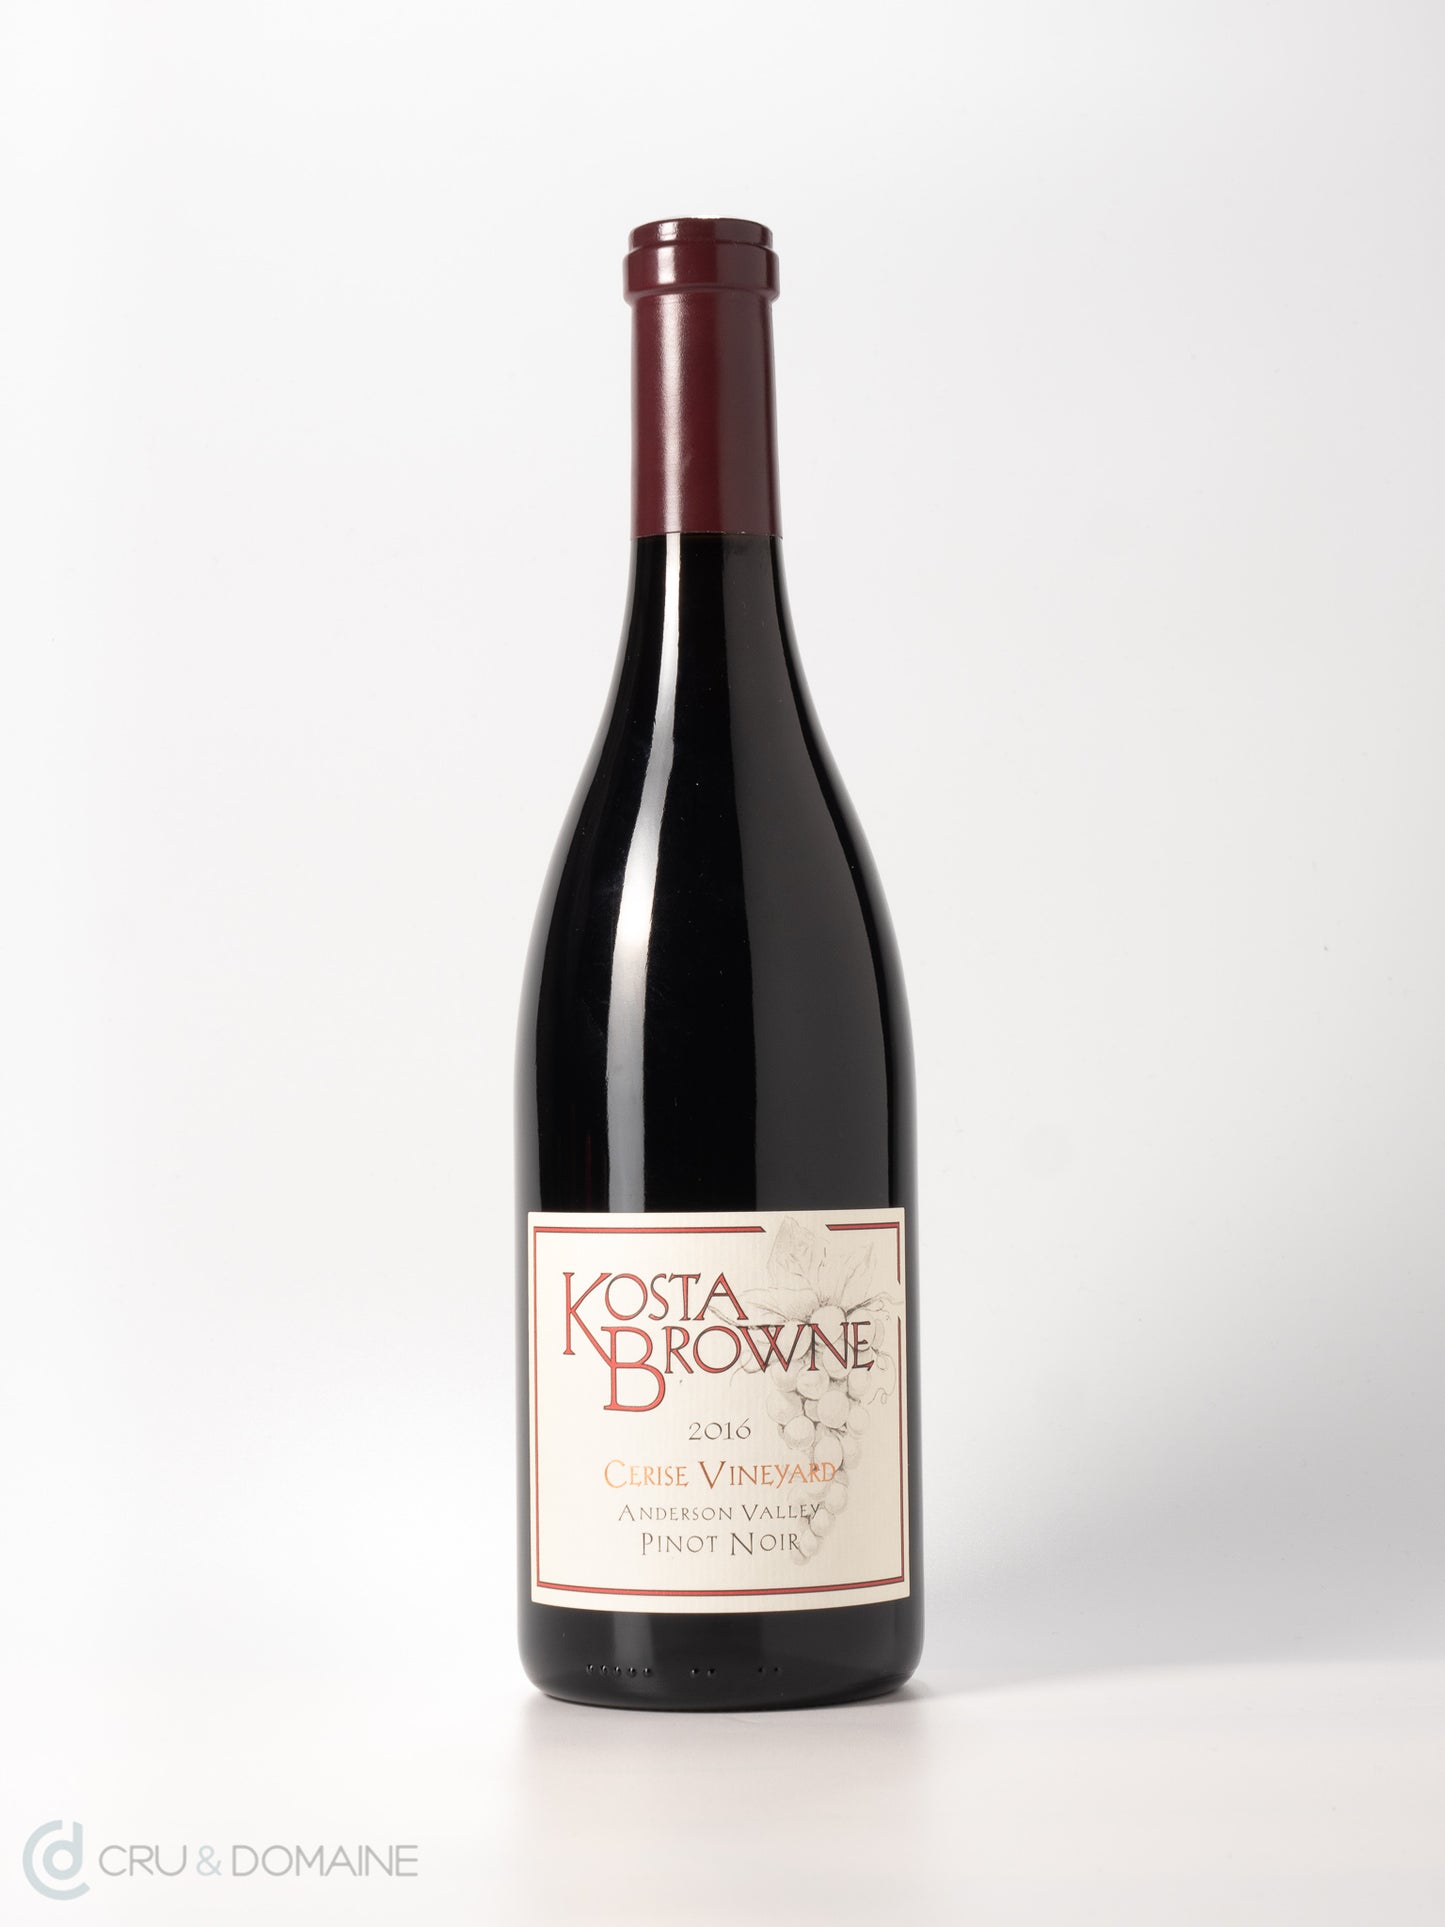 2016 Kosta Browne, Pinot Noir, Cerise Vineyard, Anderson Valley, California